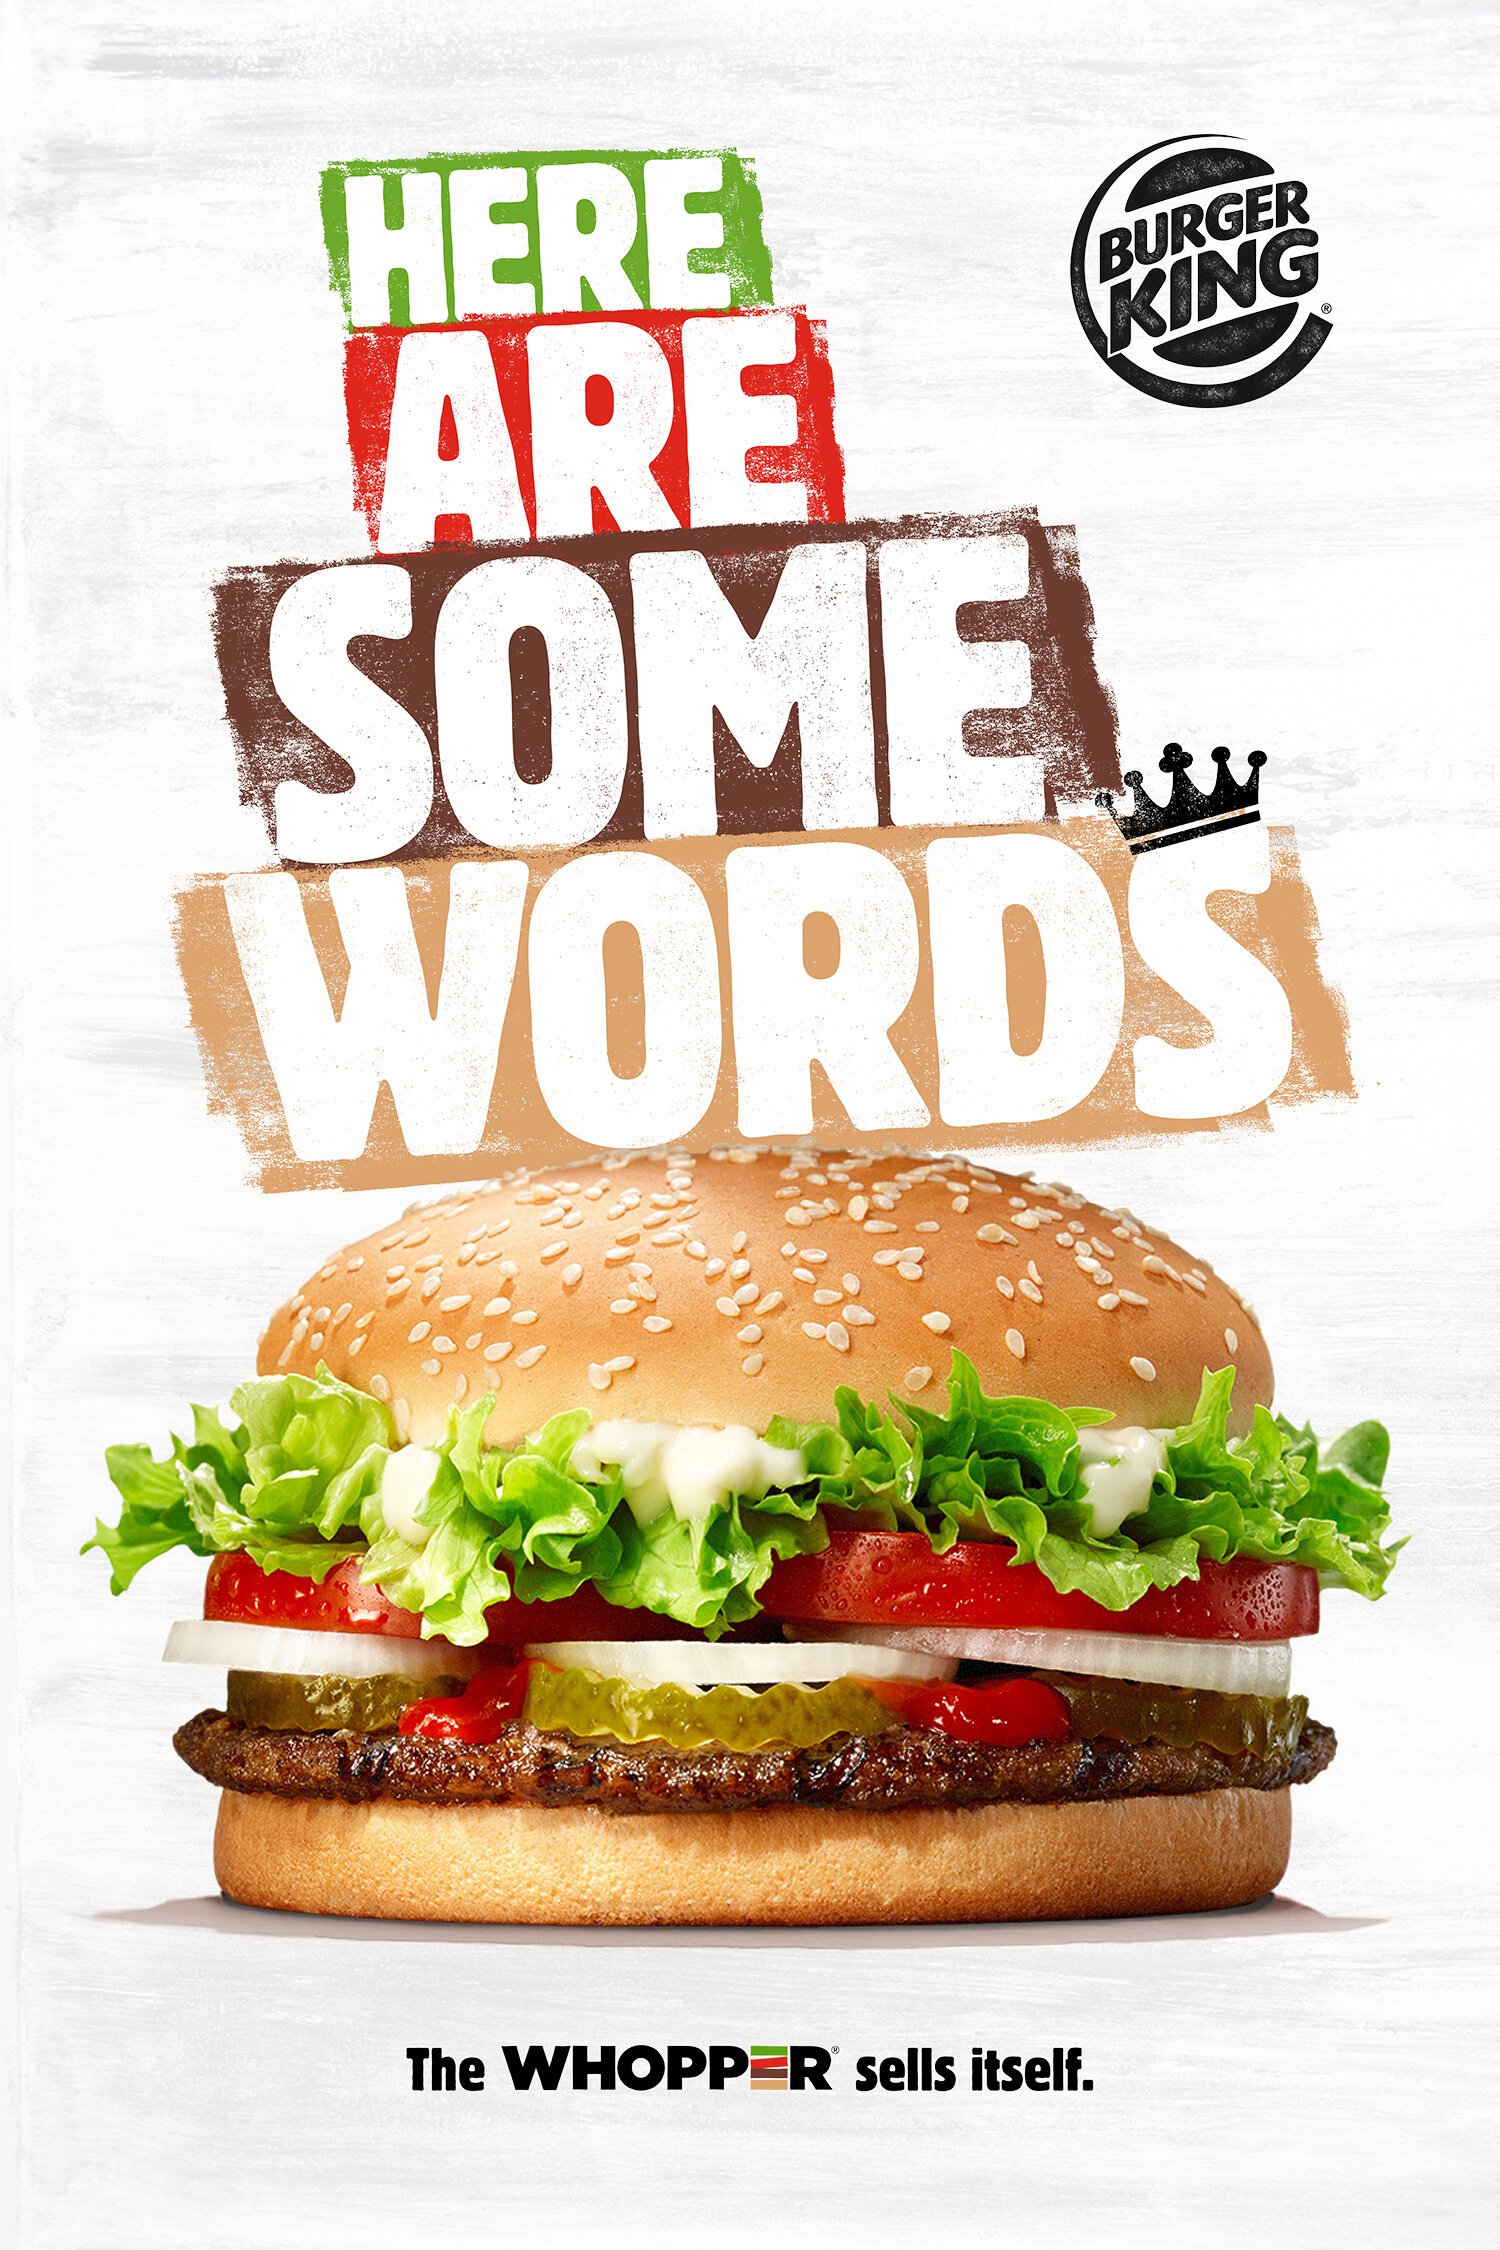 Burger King: The Whopper sells itself — JB